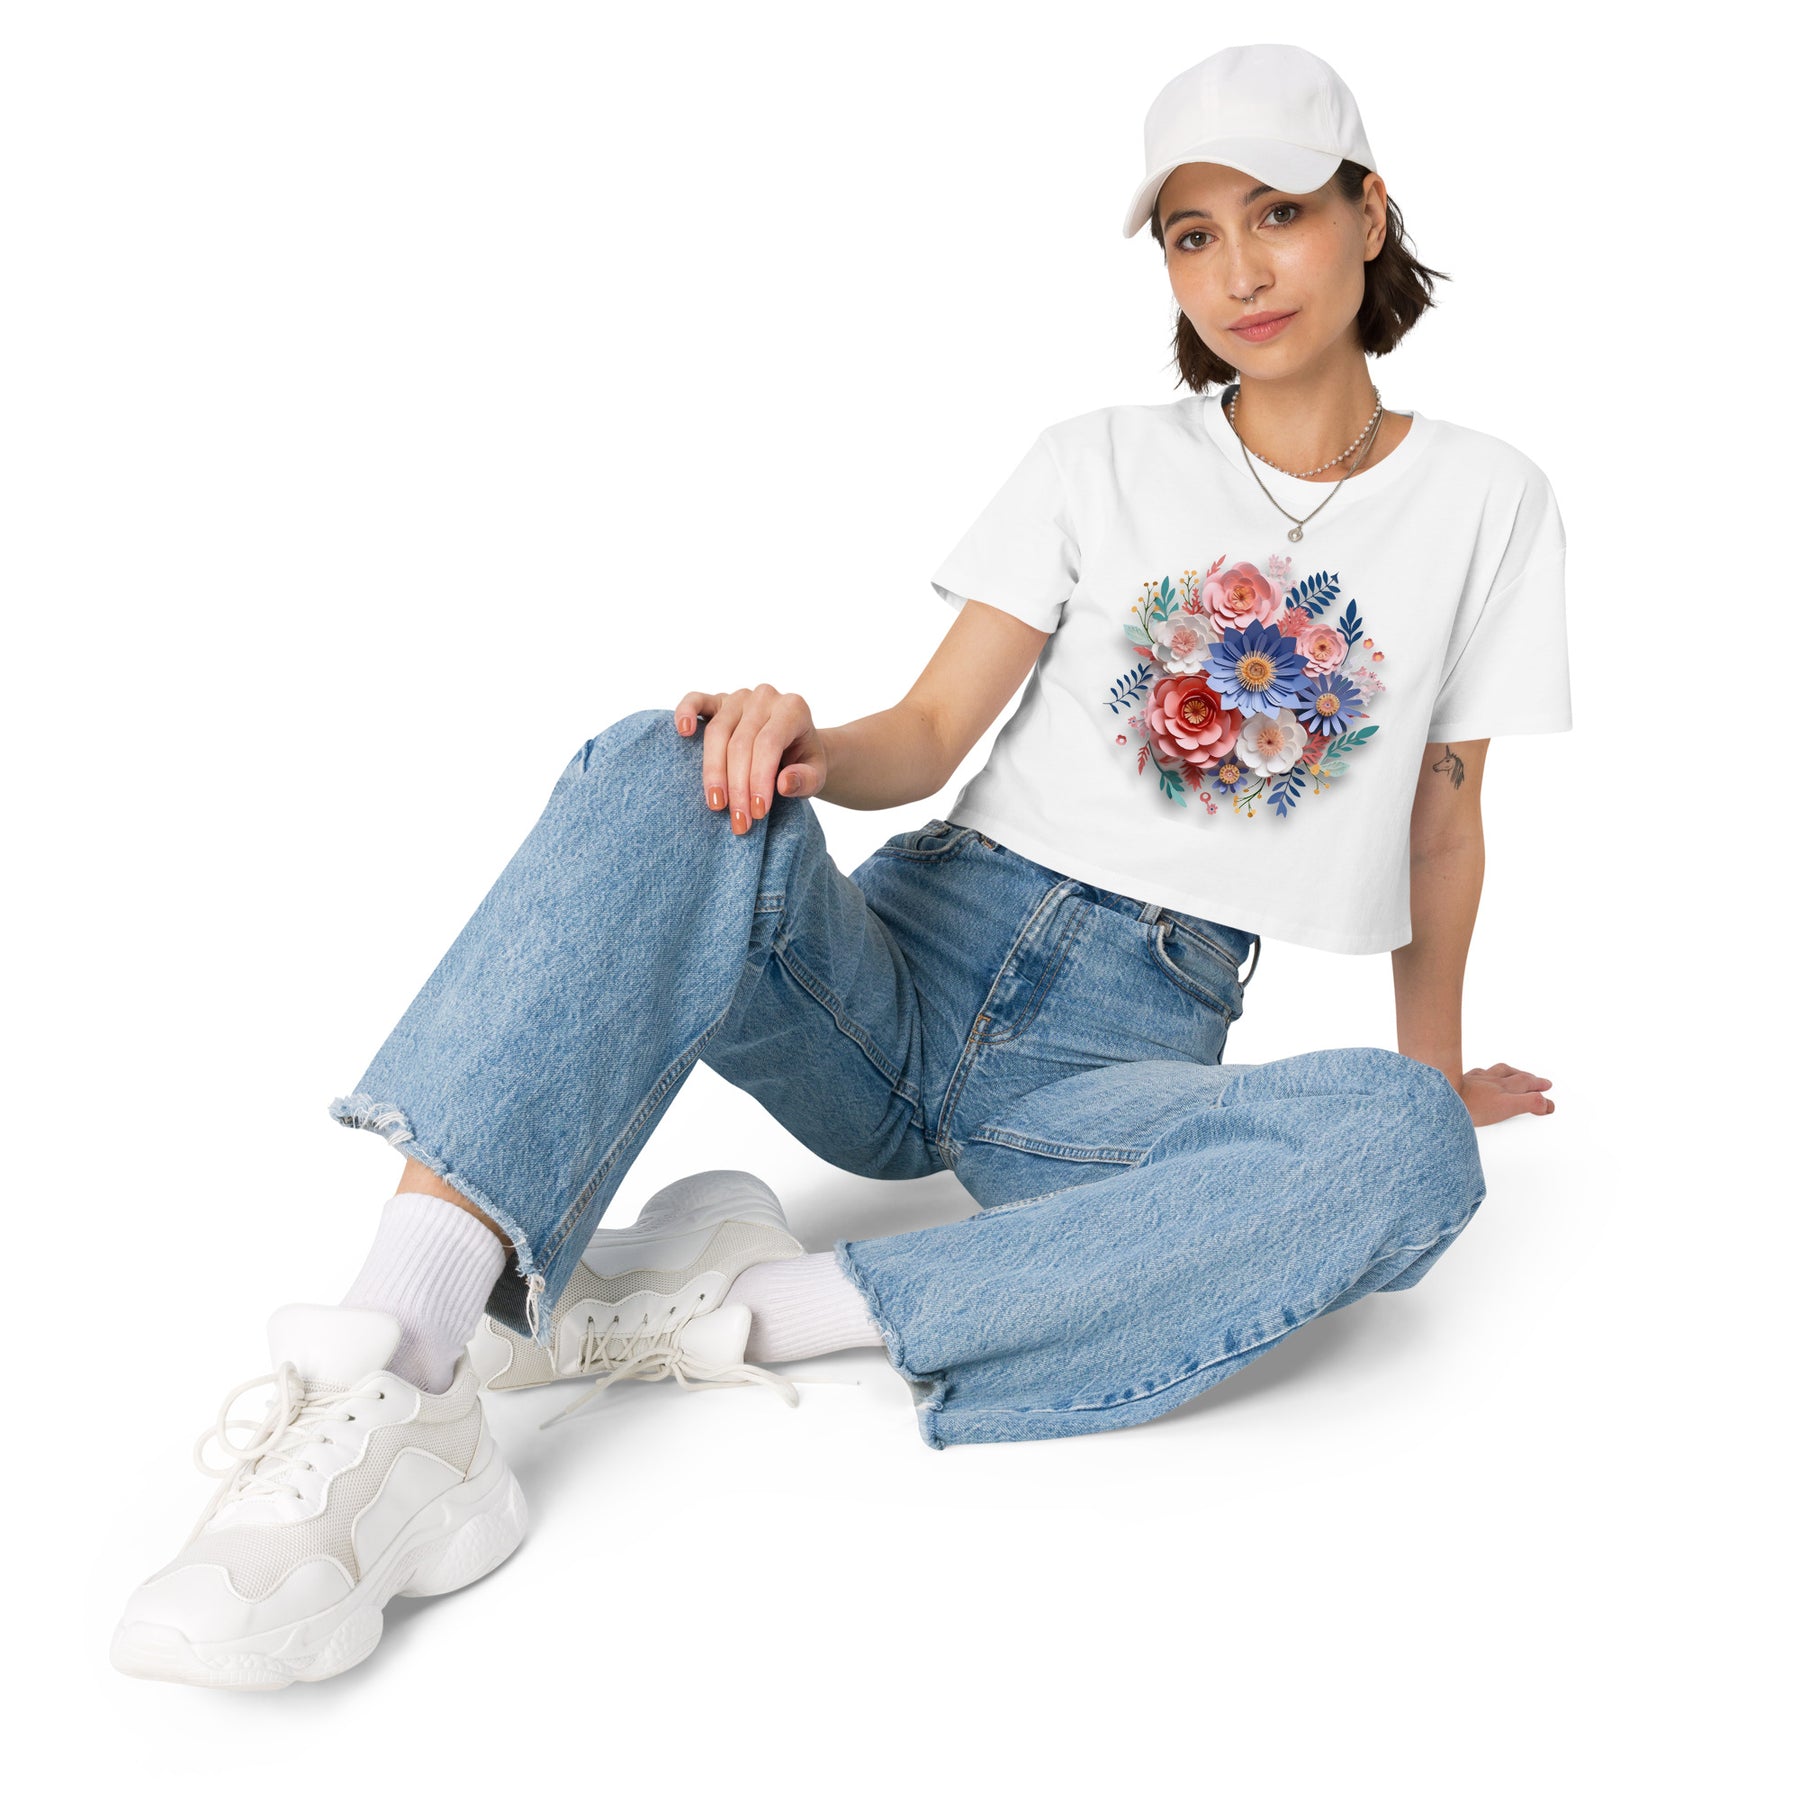 Flower Papercut Lilac | Women’s Crop Top